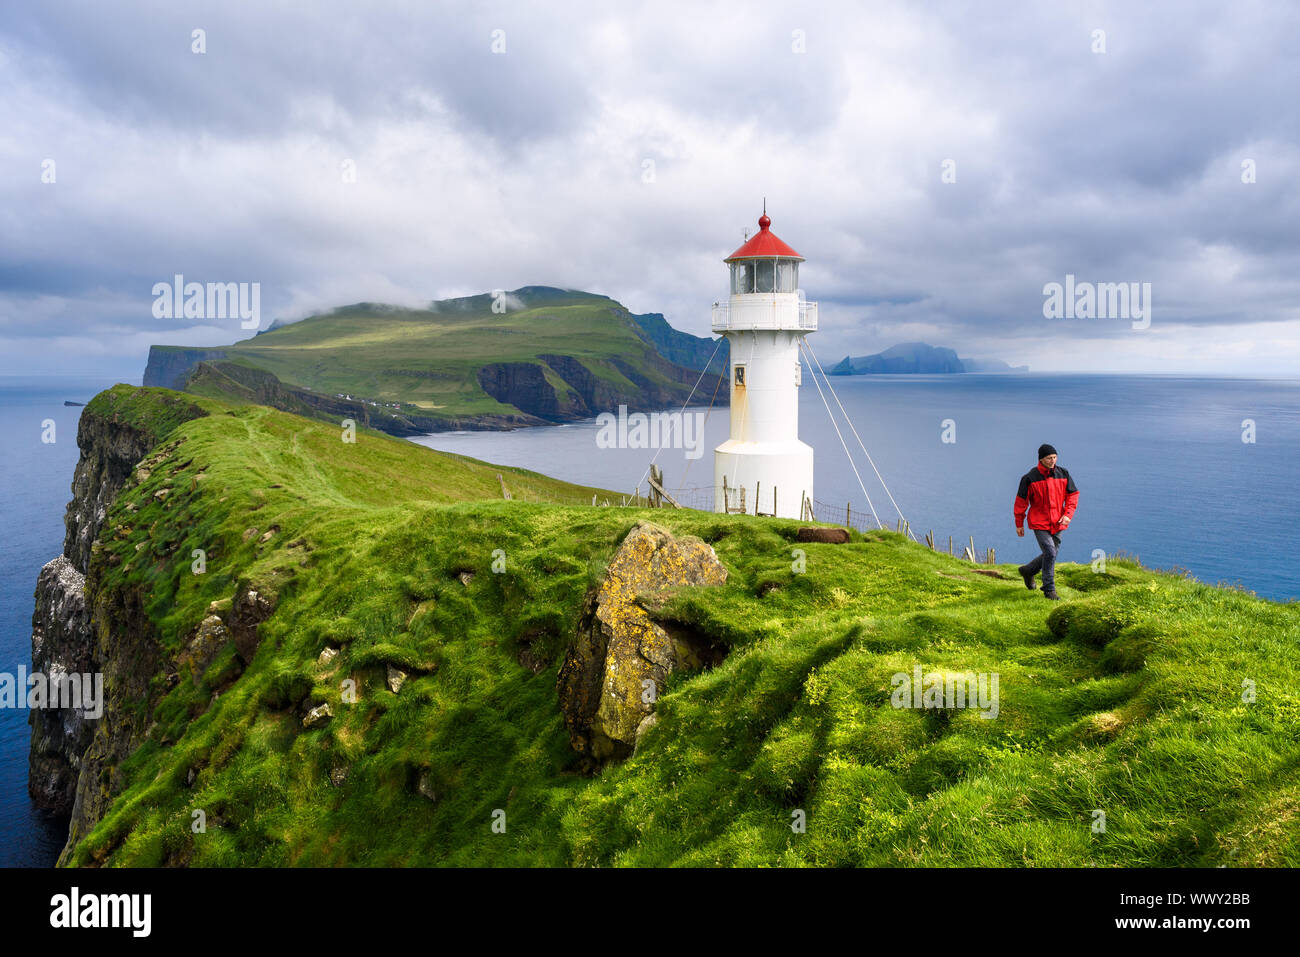 Mykinesholm islet lighthouse near Mykines island. Mykinesholmur, Faroe islands. Tourist in red jacket explores attractions. Summer landscape Stock Photo